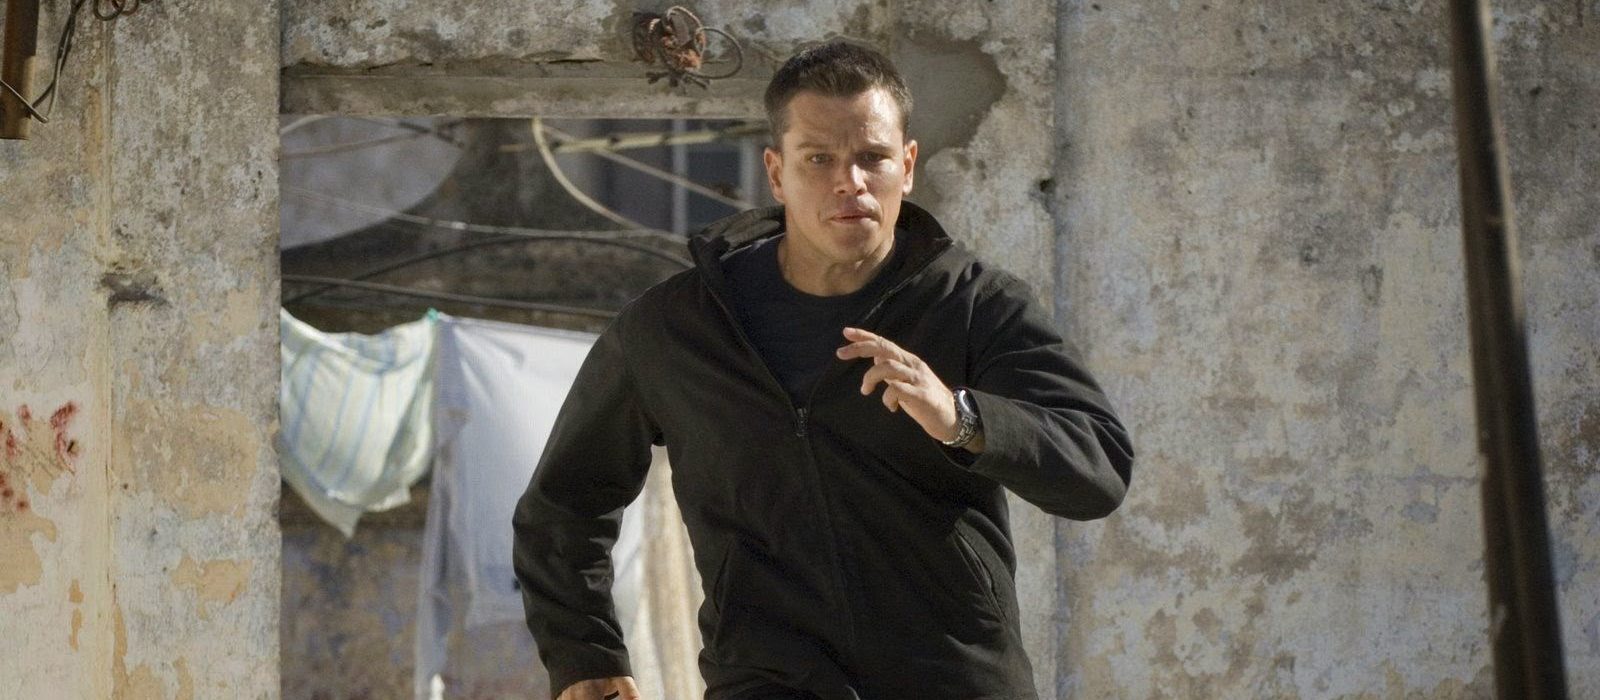 Jason Bourne Running for His Life